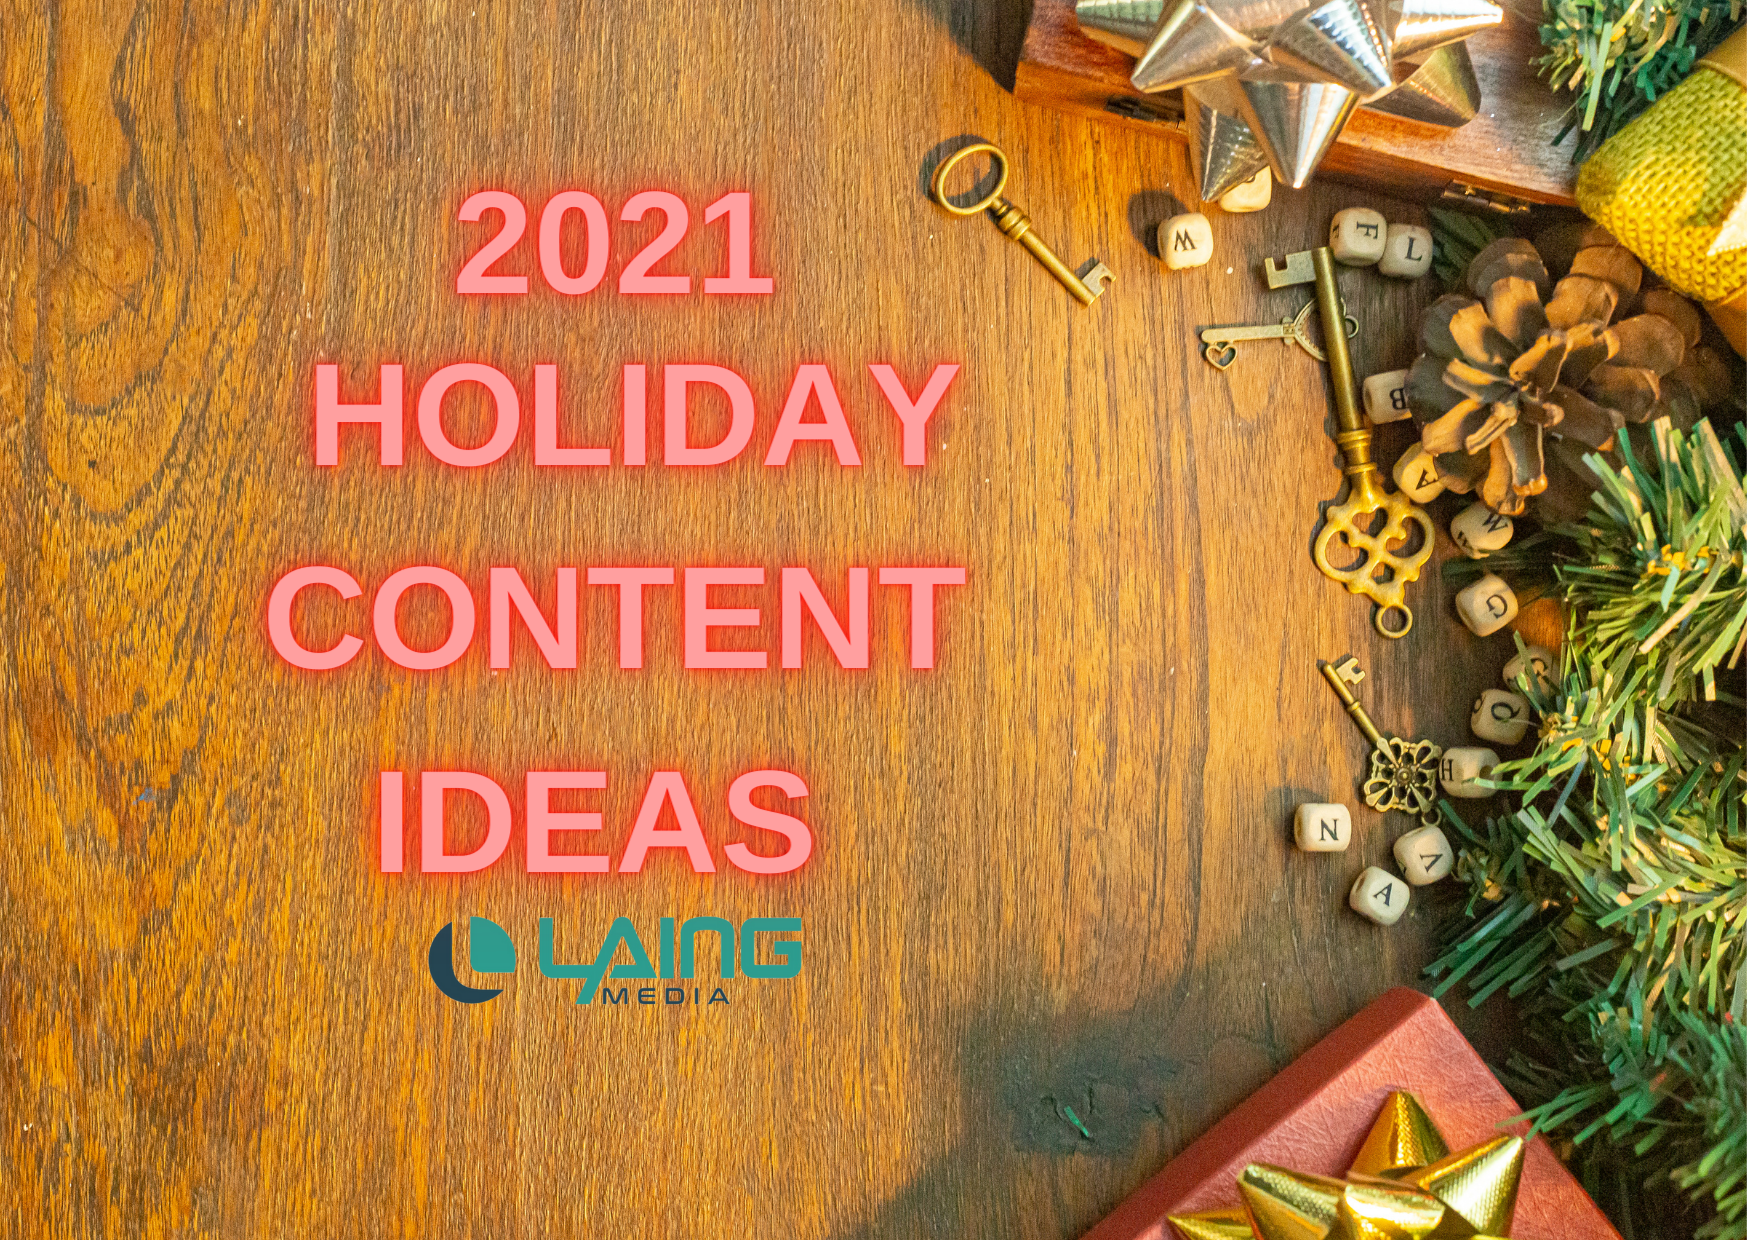 2021 Holiday Content Ideas Laing Media logo